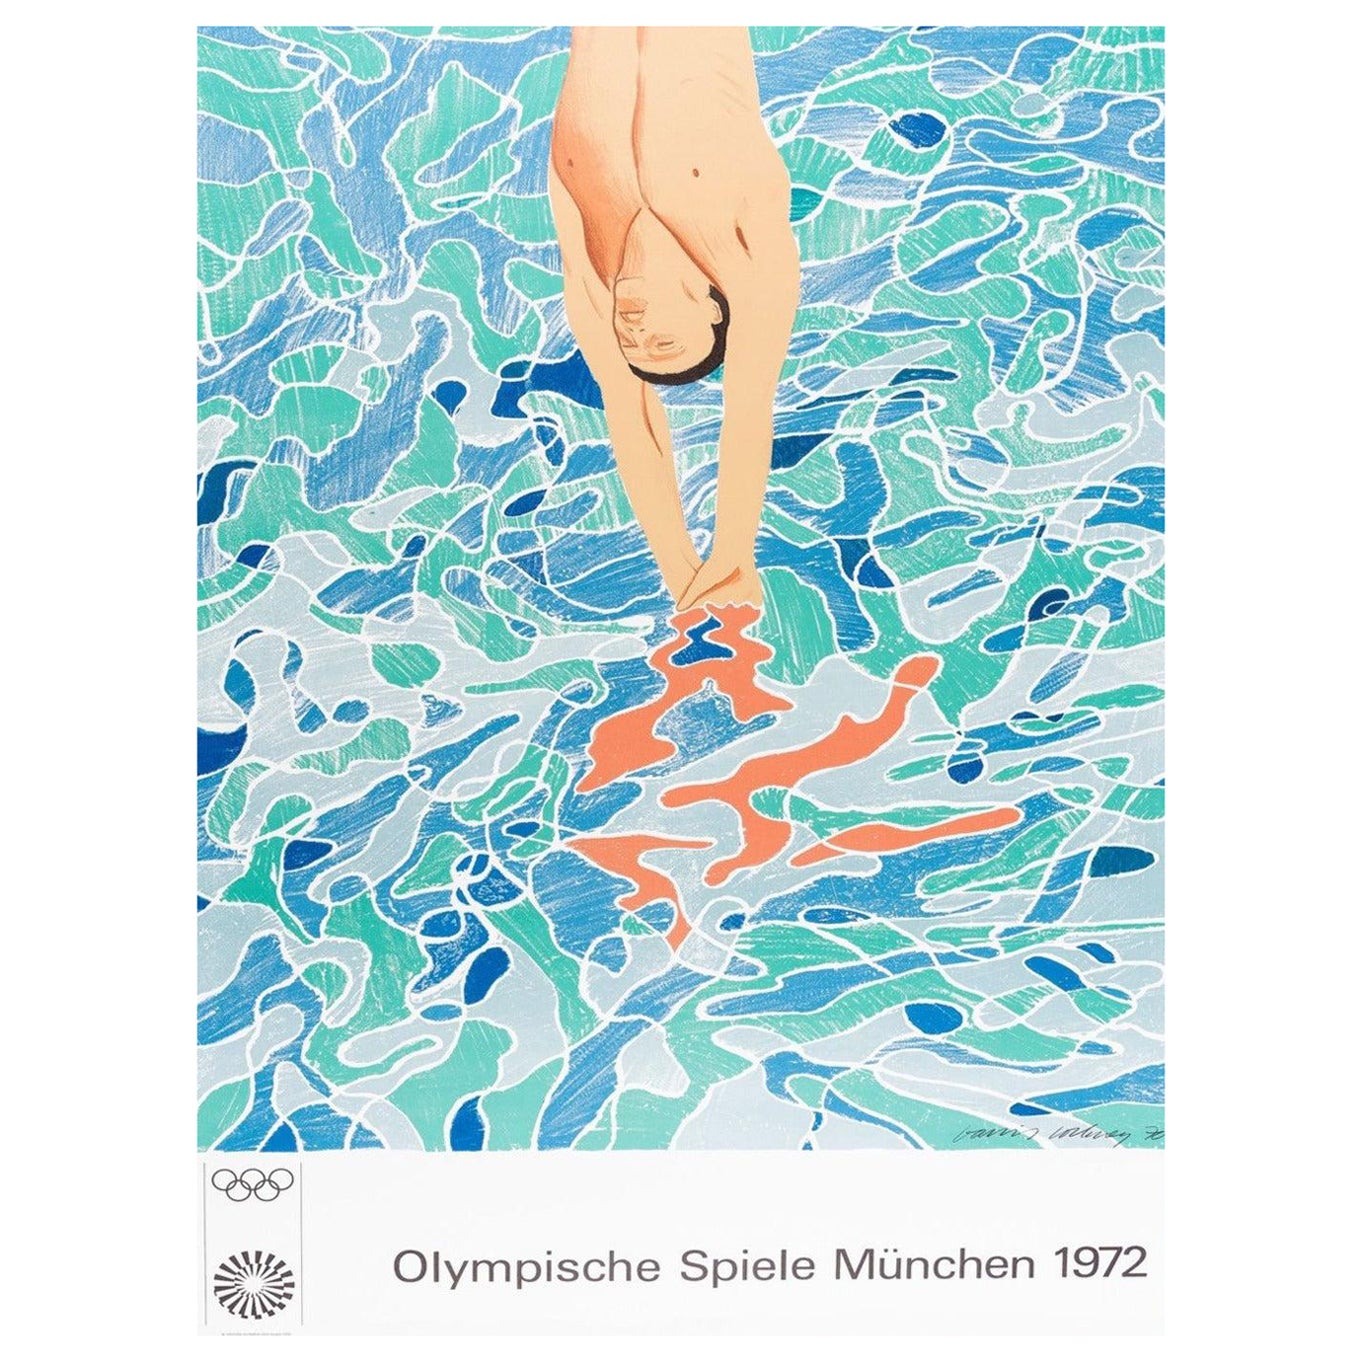 1972 Munich Olympic Games - David Hockney Original Vintage Poster